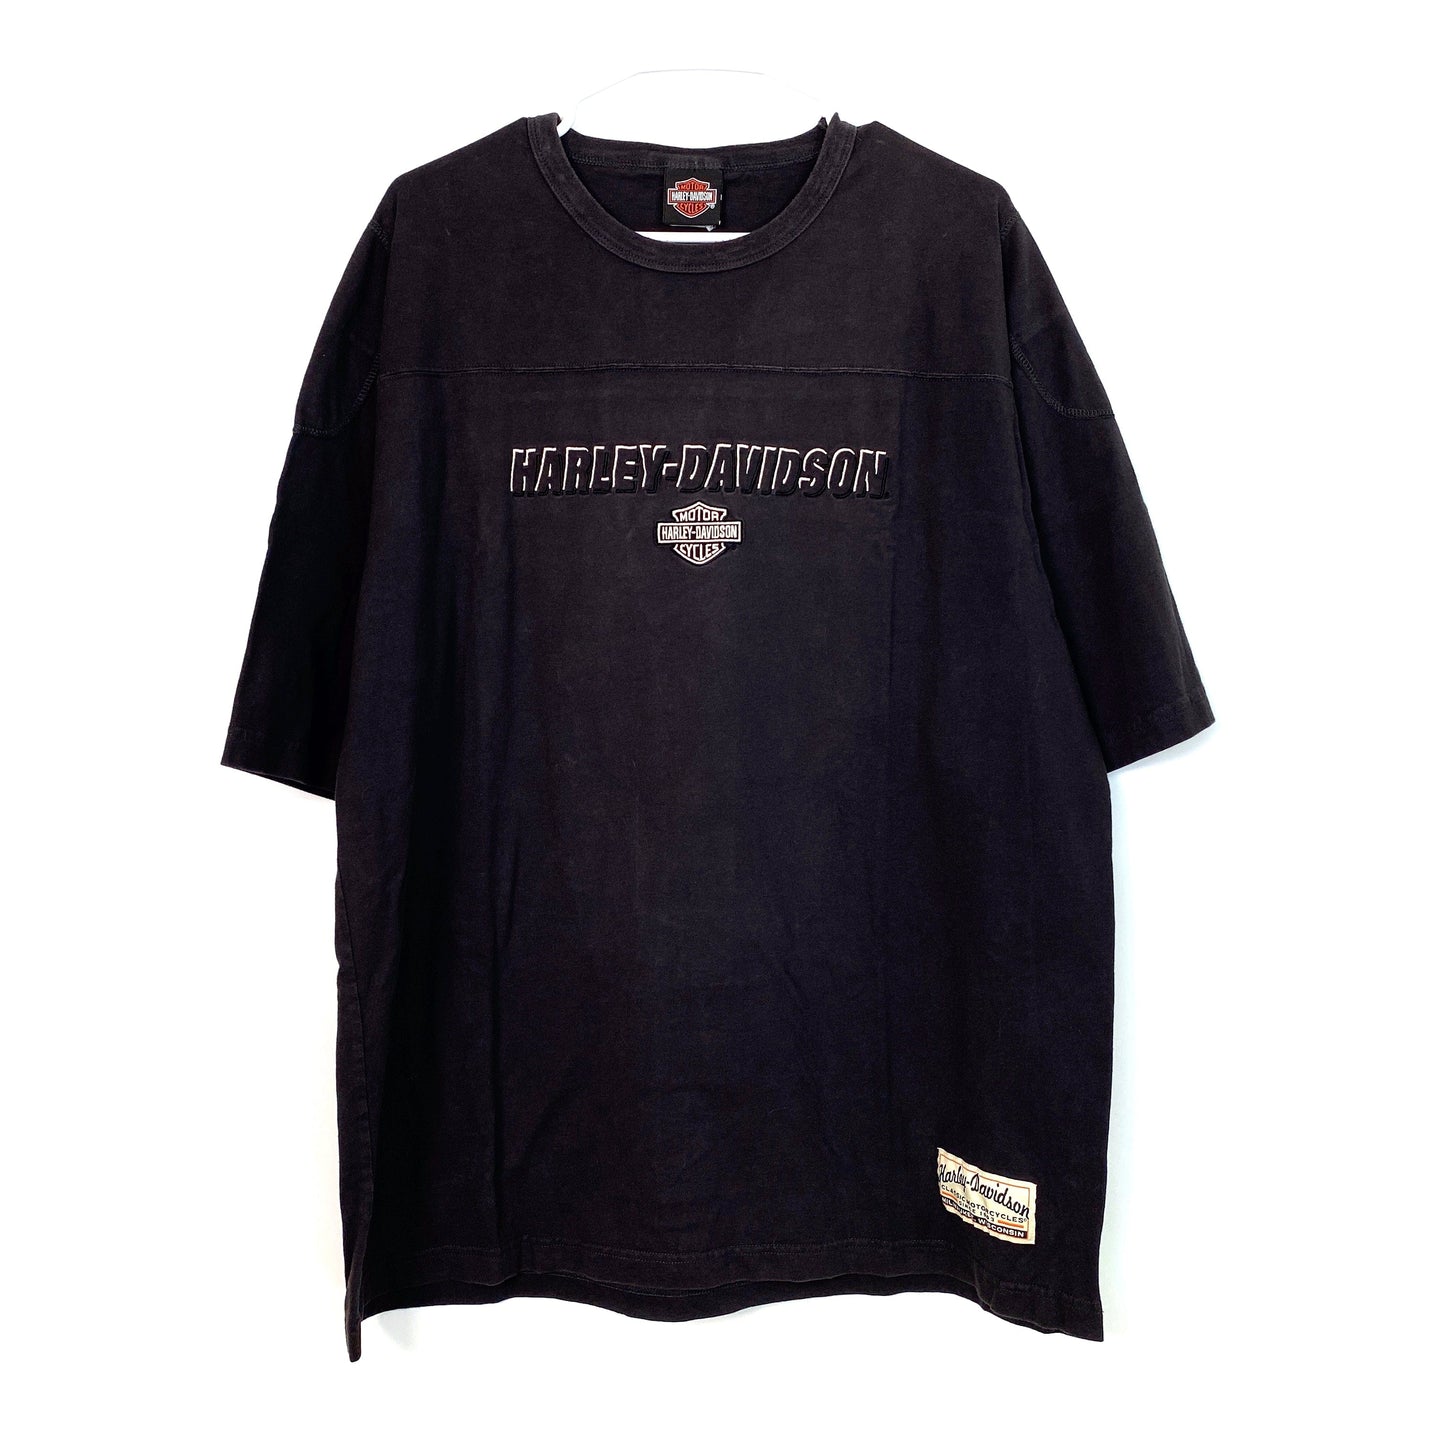 Harley Davidson Mens Size XL Black T-Shirt Henderson Nevada Embroidered S/s